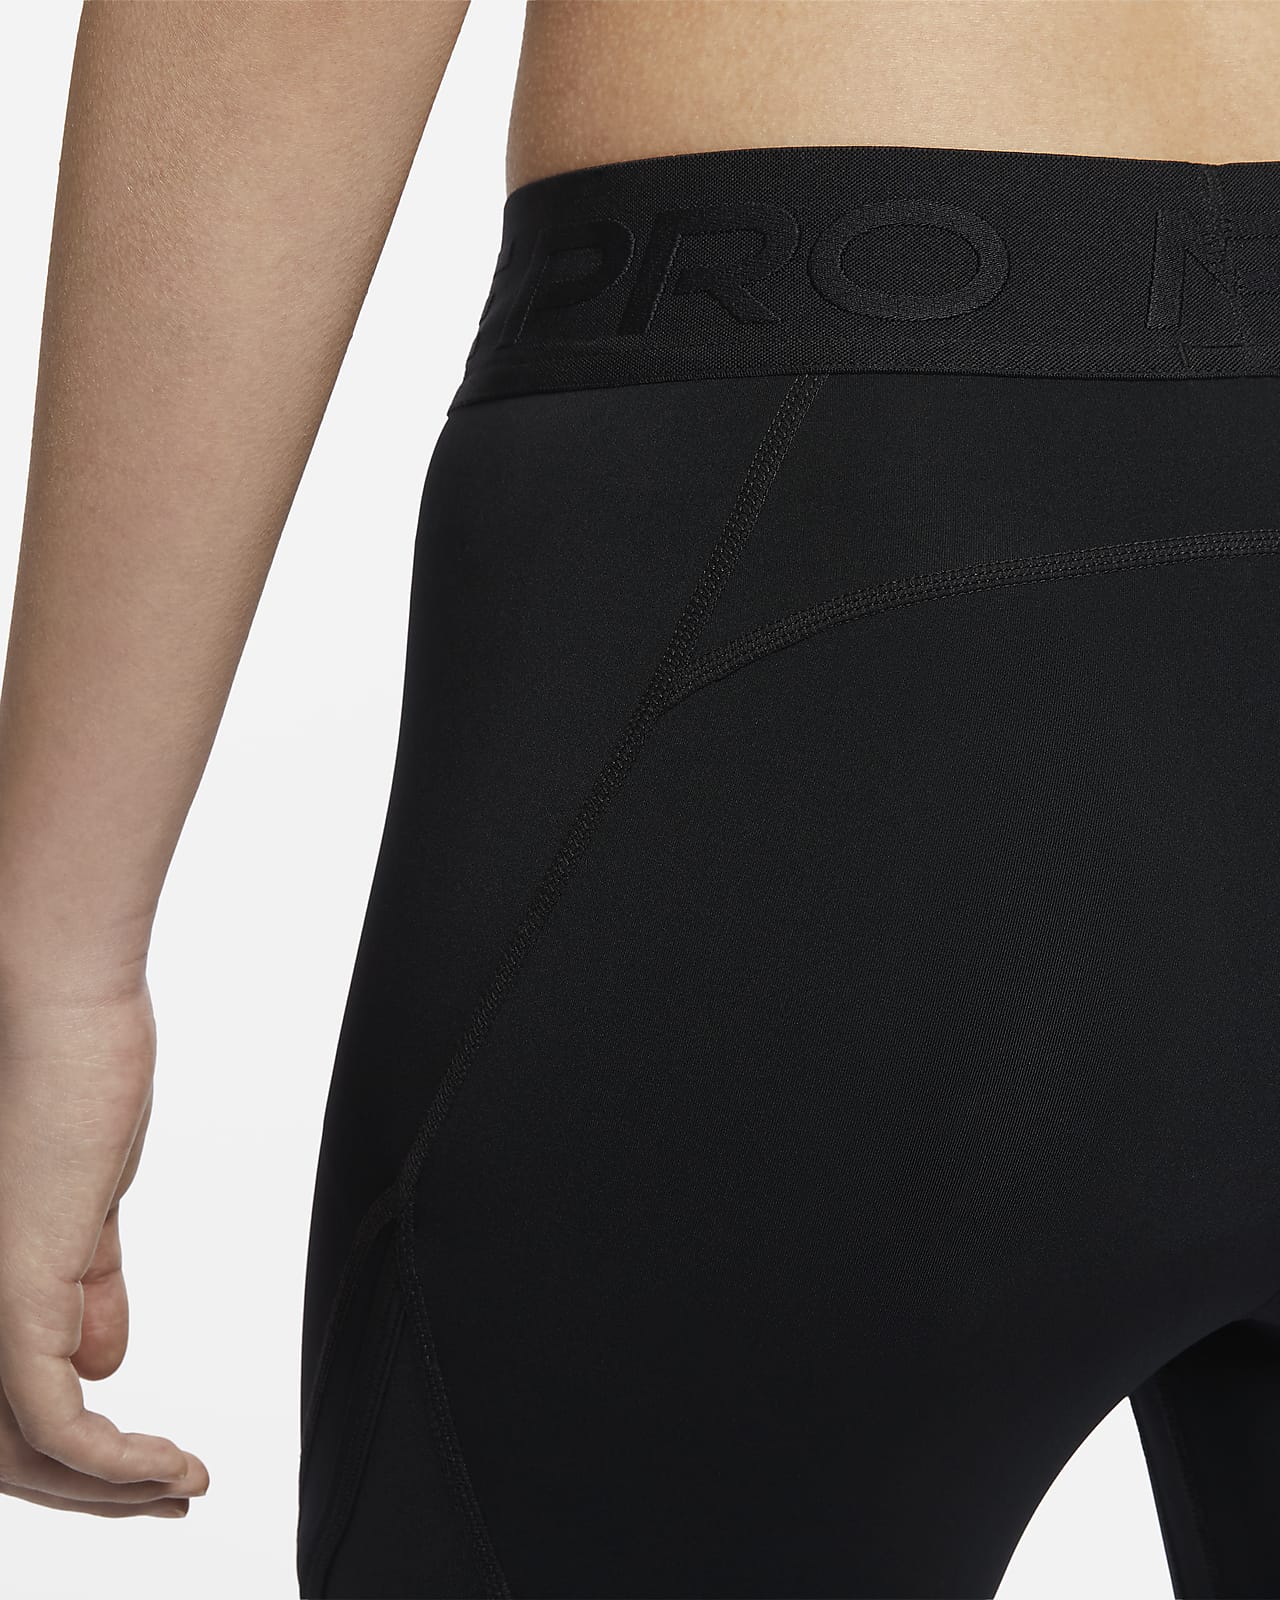 Nike Dri-fit One Plus Size Mid-Rise Camo-Print Leggings Black Size 1X MSRP  $70